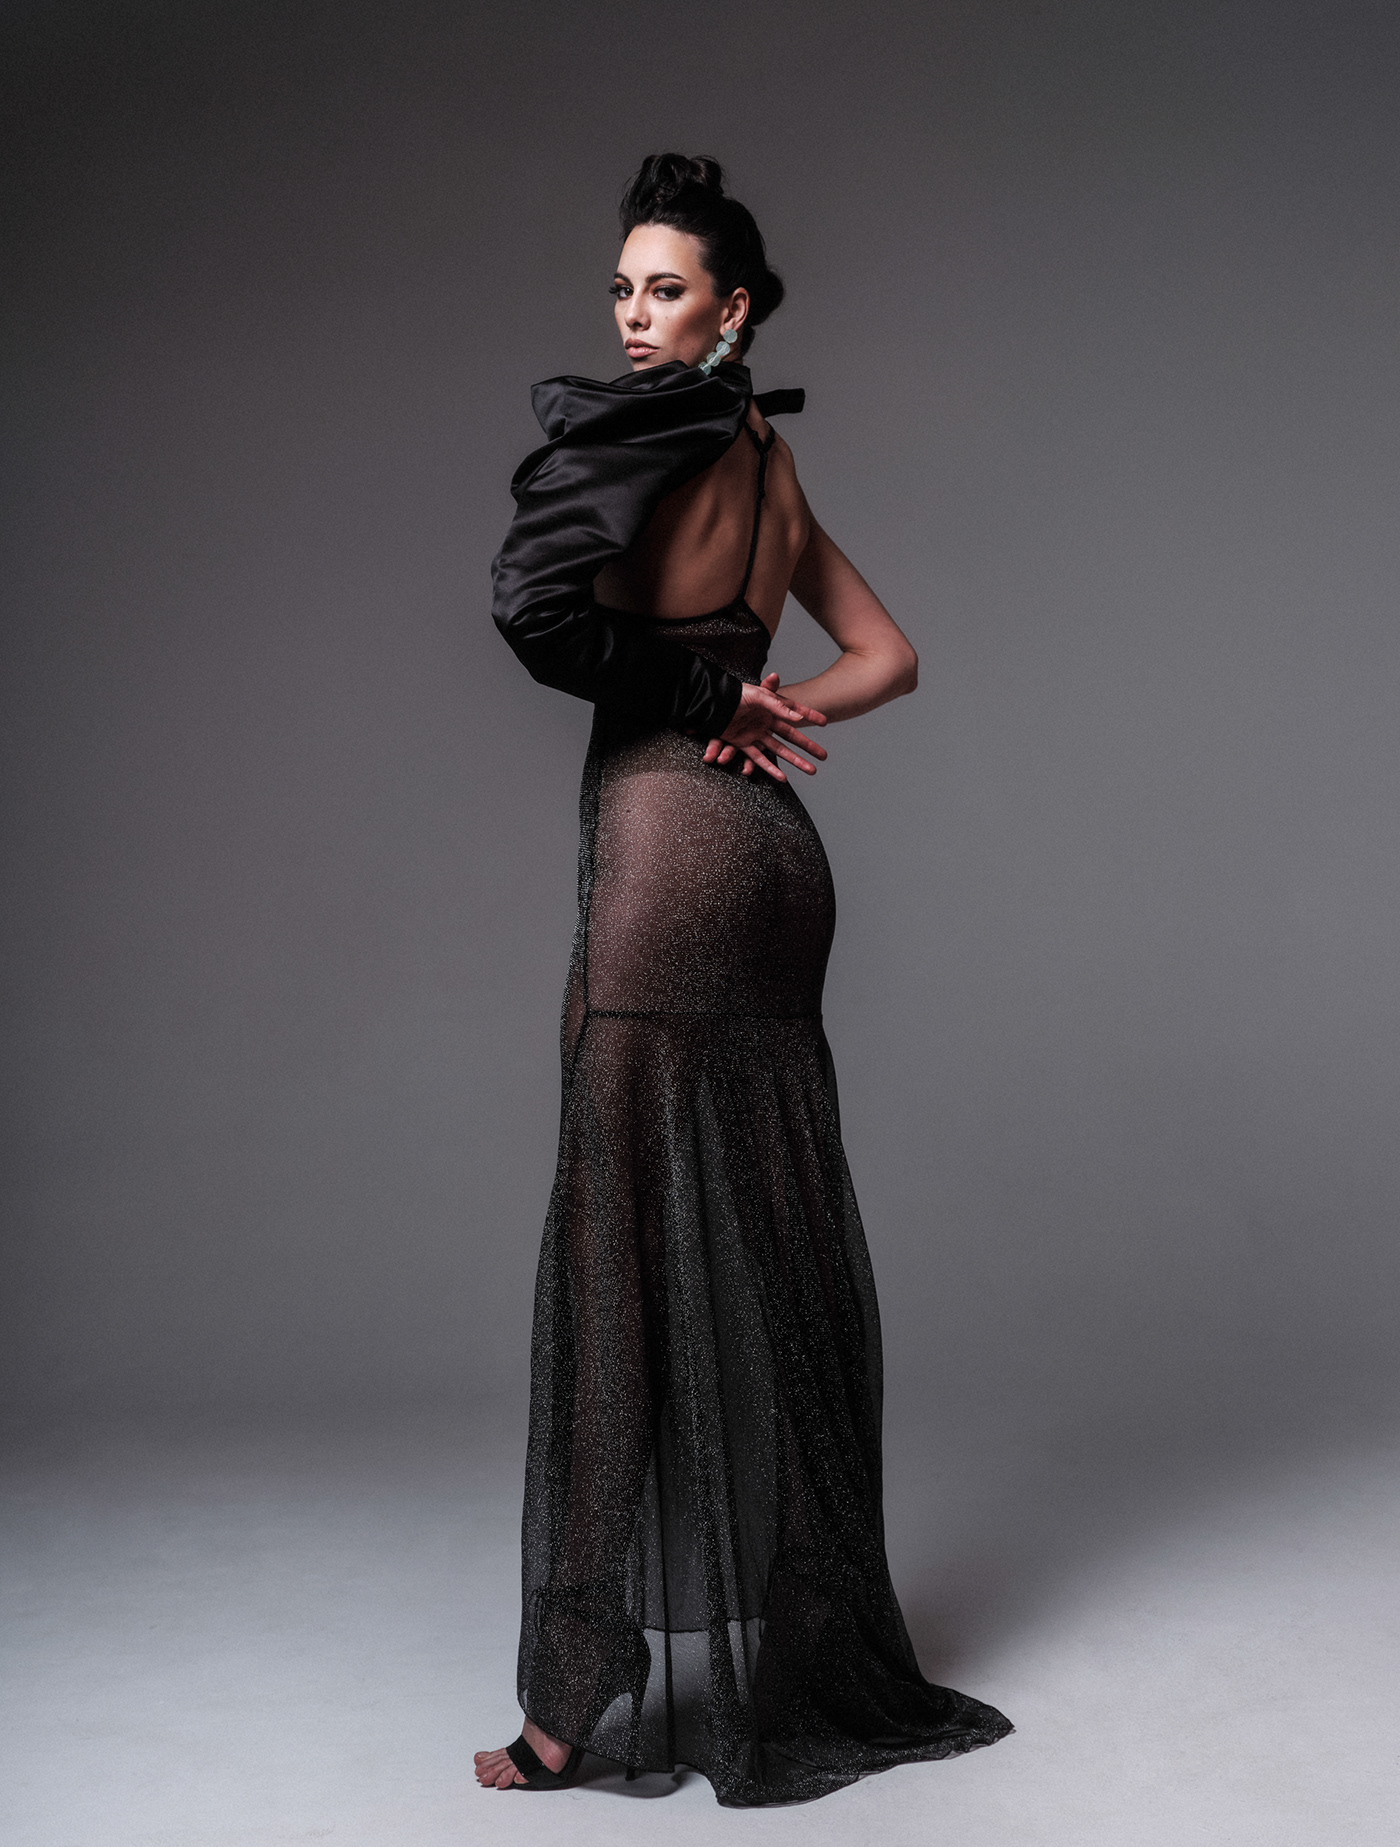 Fashion  beauty editorial modeling styling  art fashionshoot fashionphotography